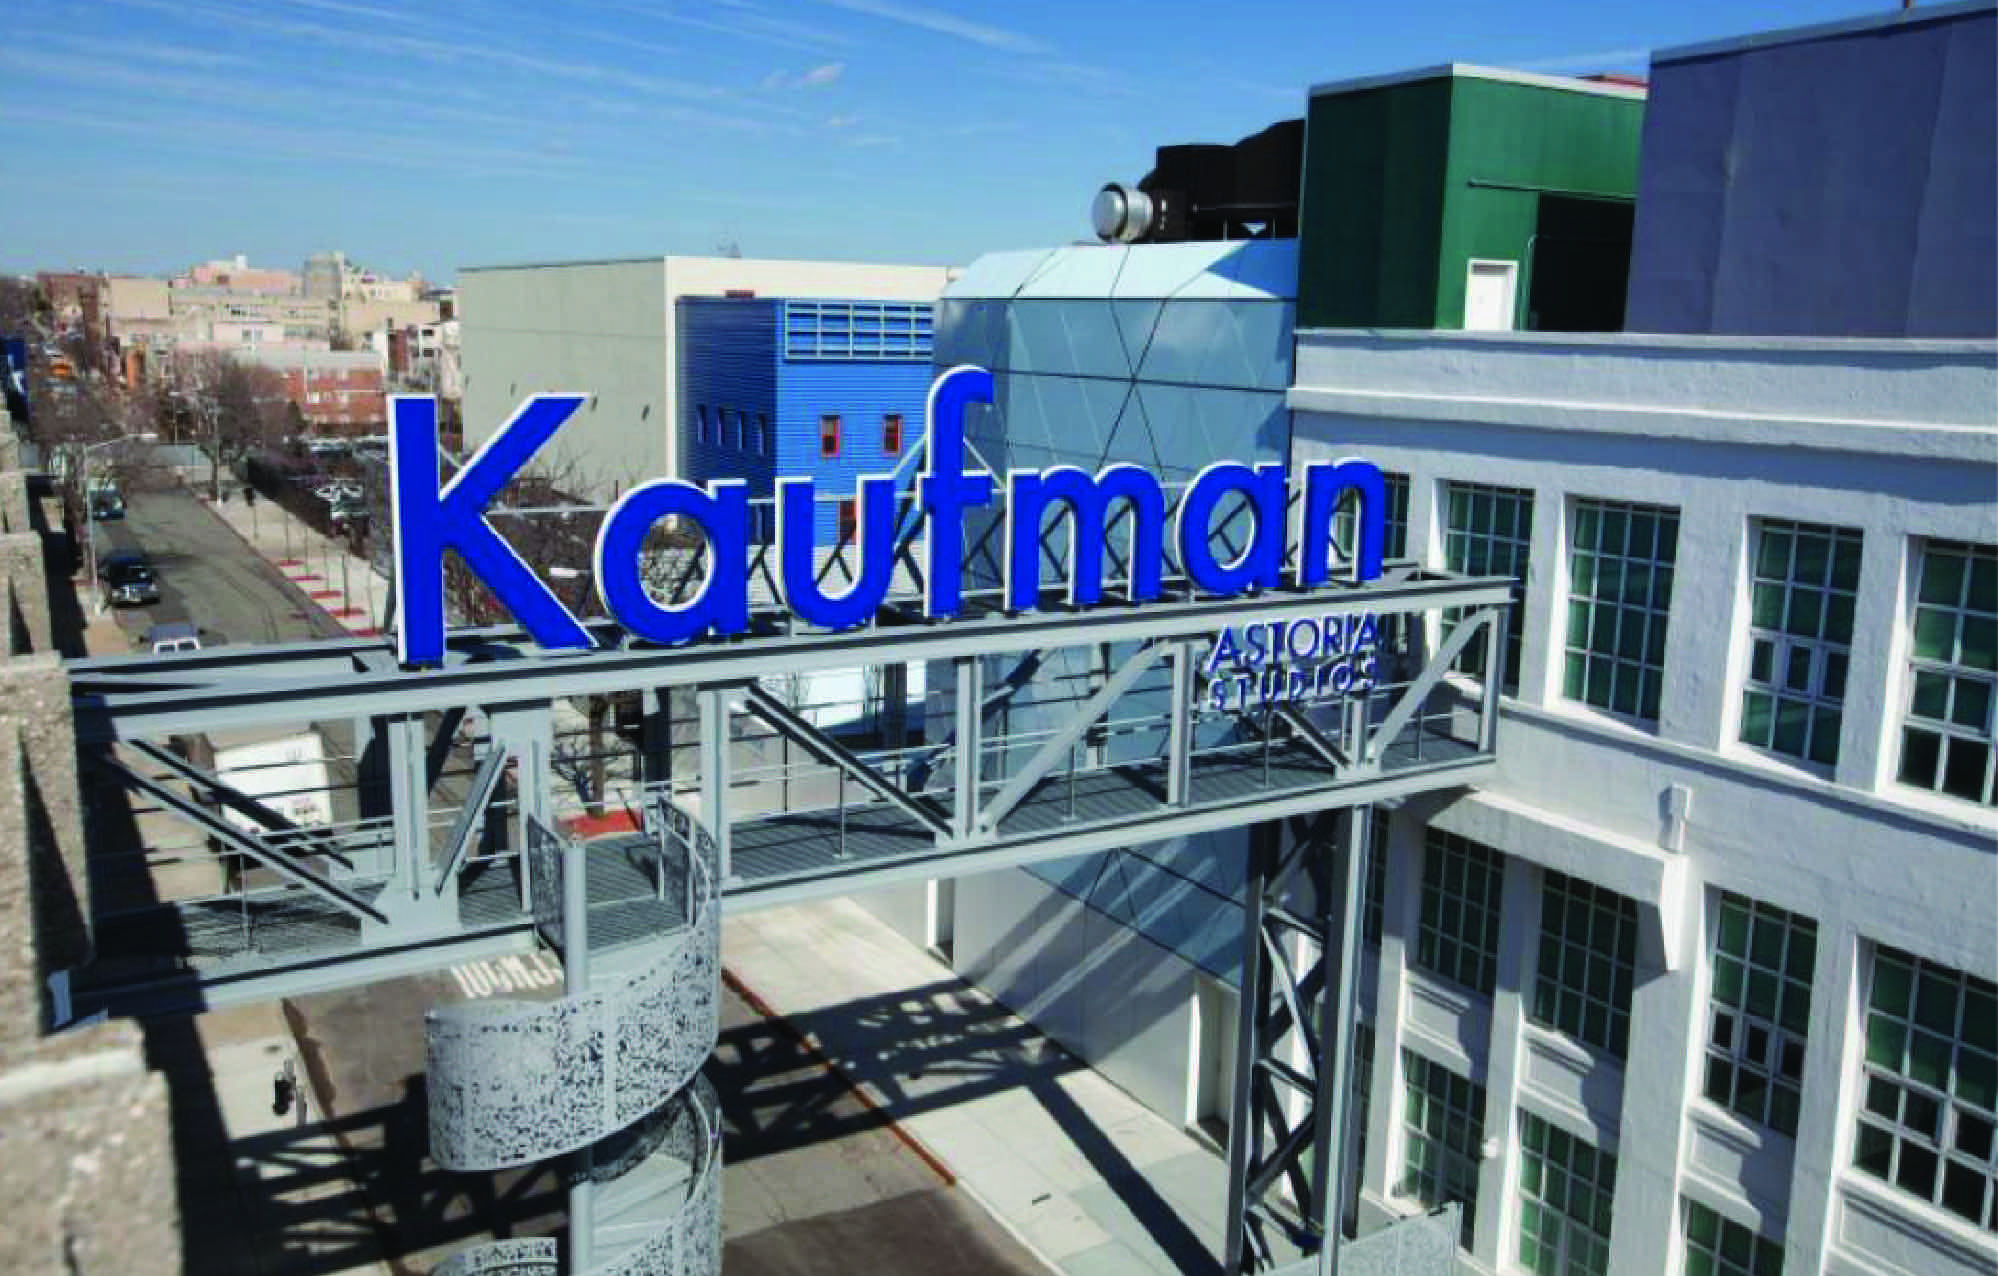 Hackman Capital Partners and Square Mile Capital Acquire New York’s Kaufman Astoria Studios